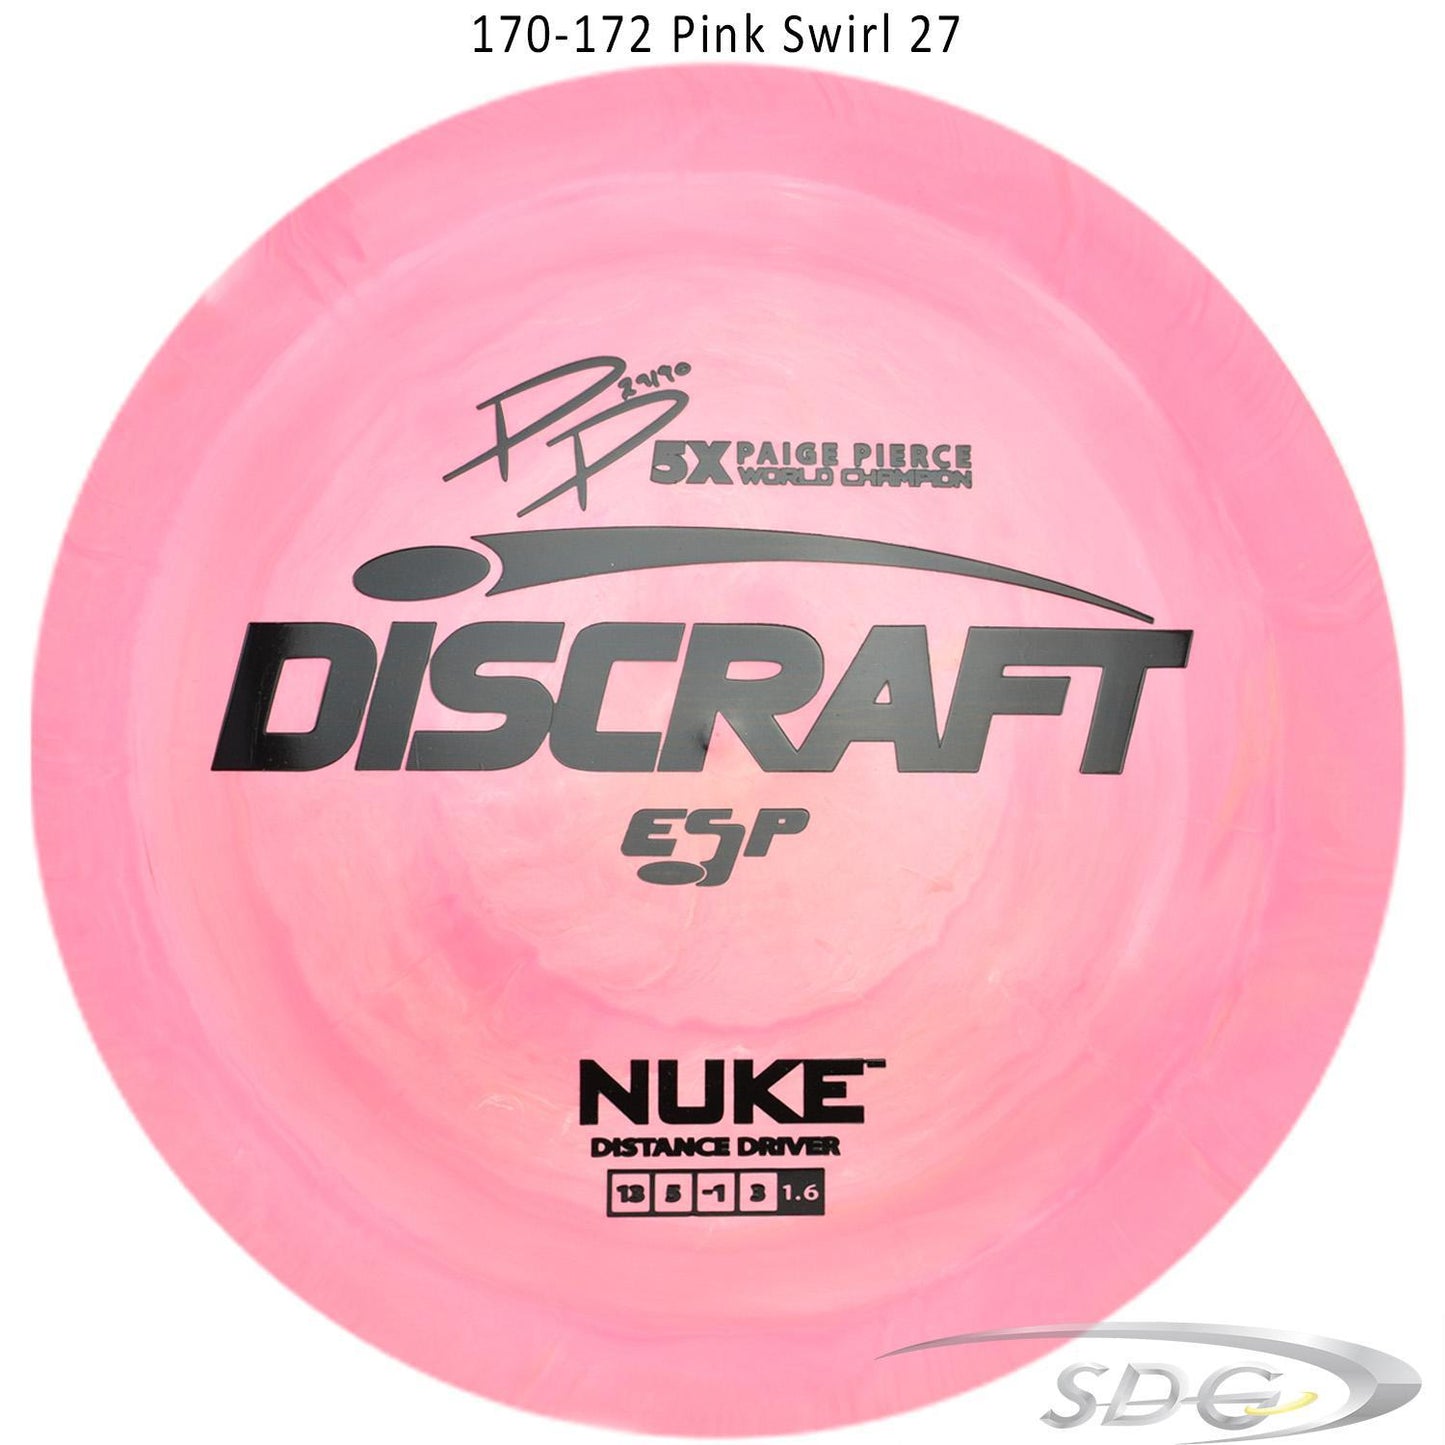 discraft-esp-nuke-paige-pierce-signature-disc-golf-distance-driver-172-170-weights 170-172 Pink Swirl 27 